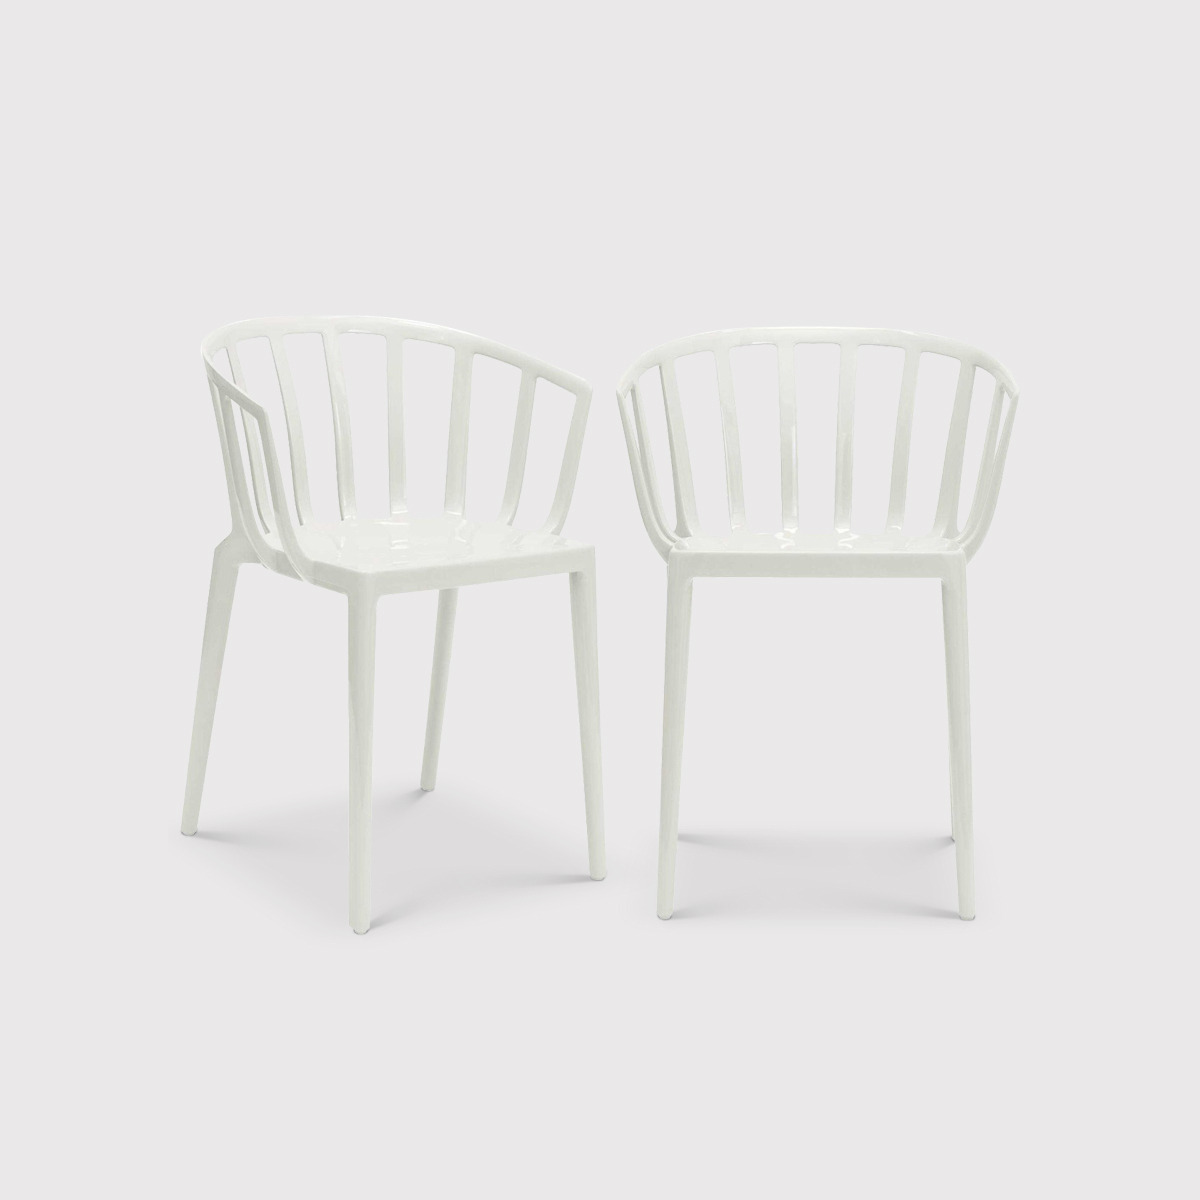 Pair of Kartell Venice Dining Chairs, White Plastic - Kartell - image 1